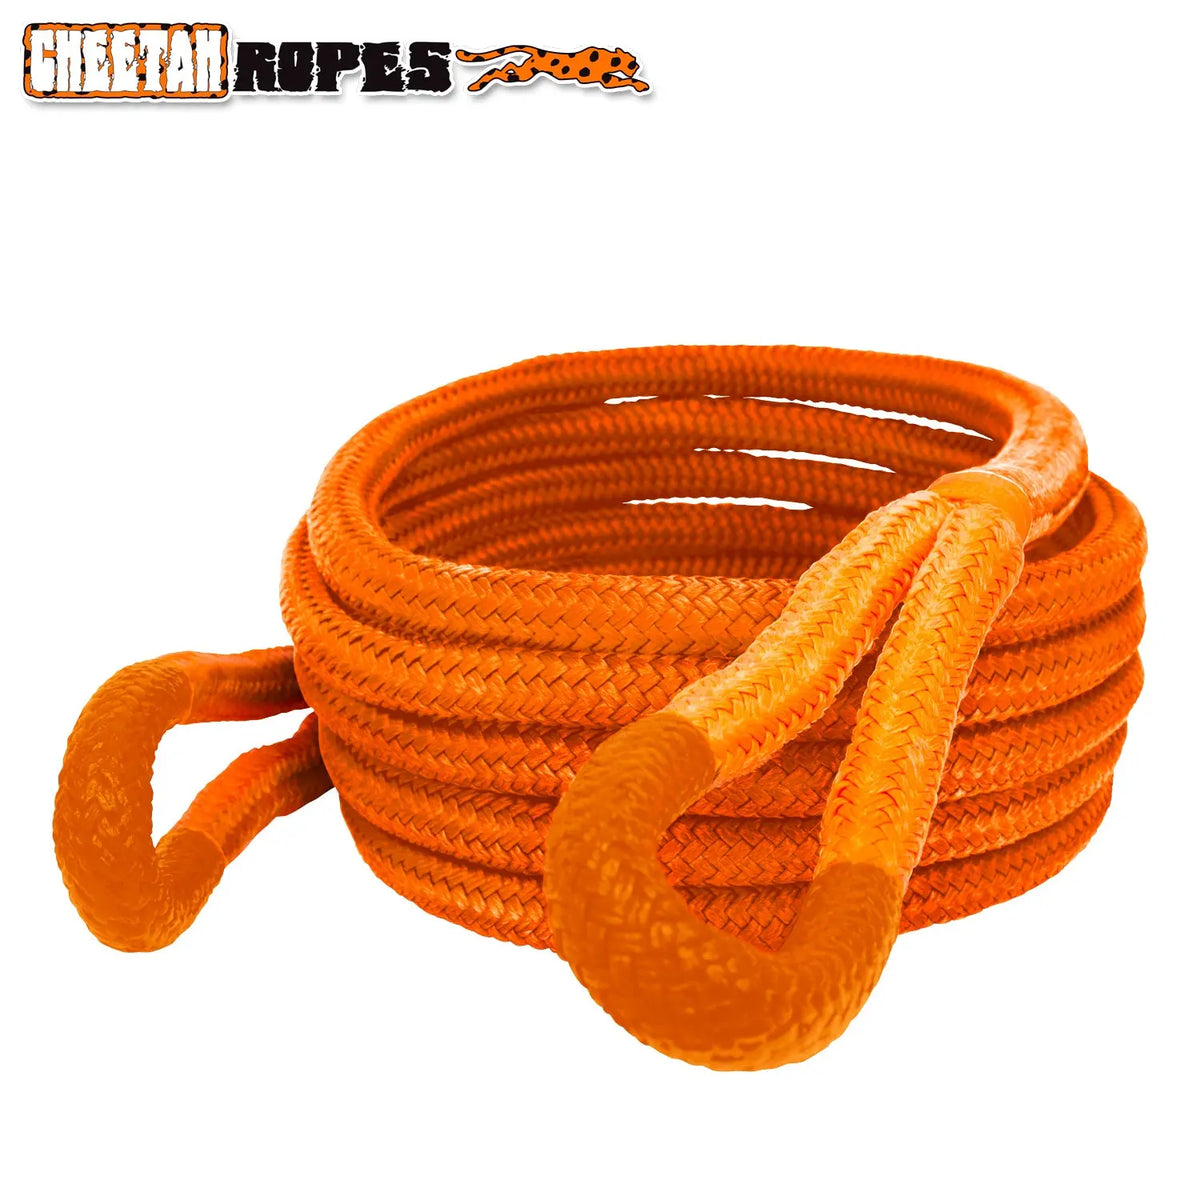 2" Cheetah Rope - Kinetic Energy Recovery Rope Custom Splice - Cheetah Ropes